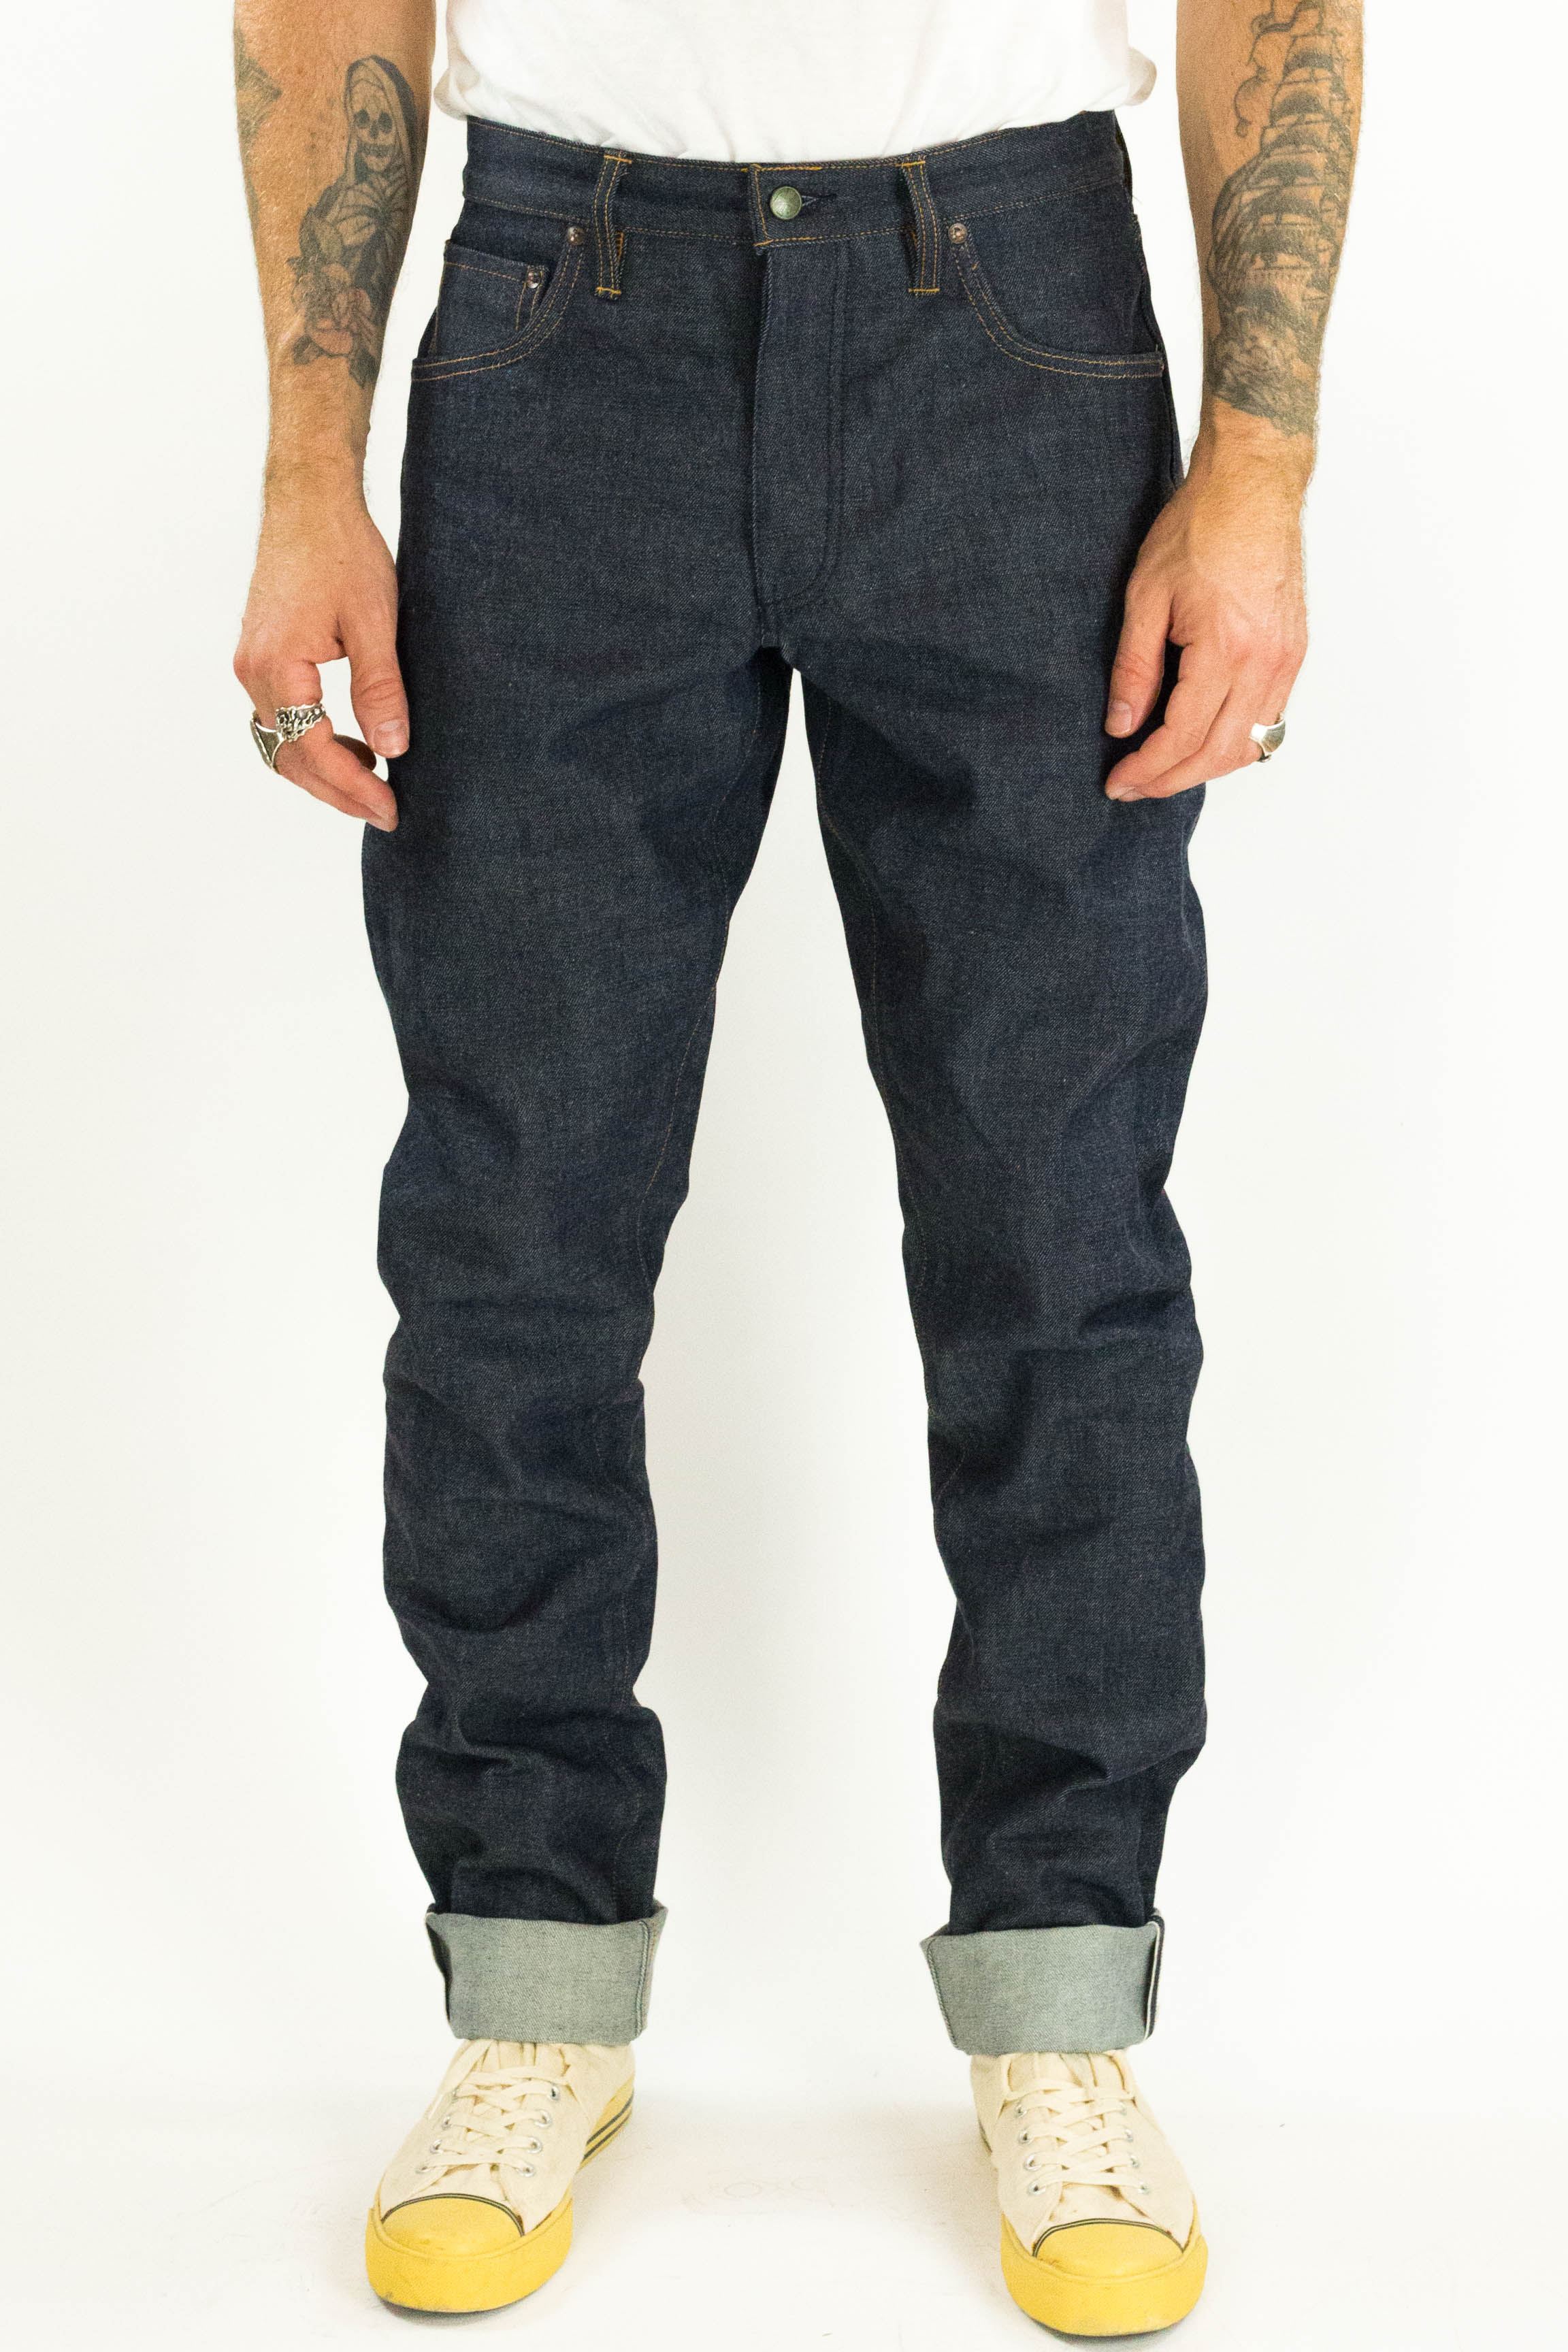 Buy HIROSHI KATO Jeans Men's The Pen Slim Straight Raw 14 oz 4-Way Stretch  Selvedge Denim Slim Fits RAW 29 at Amazon.in